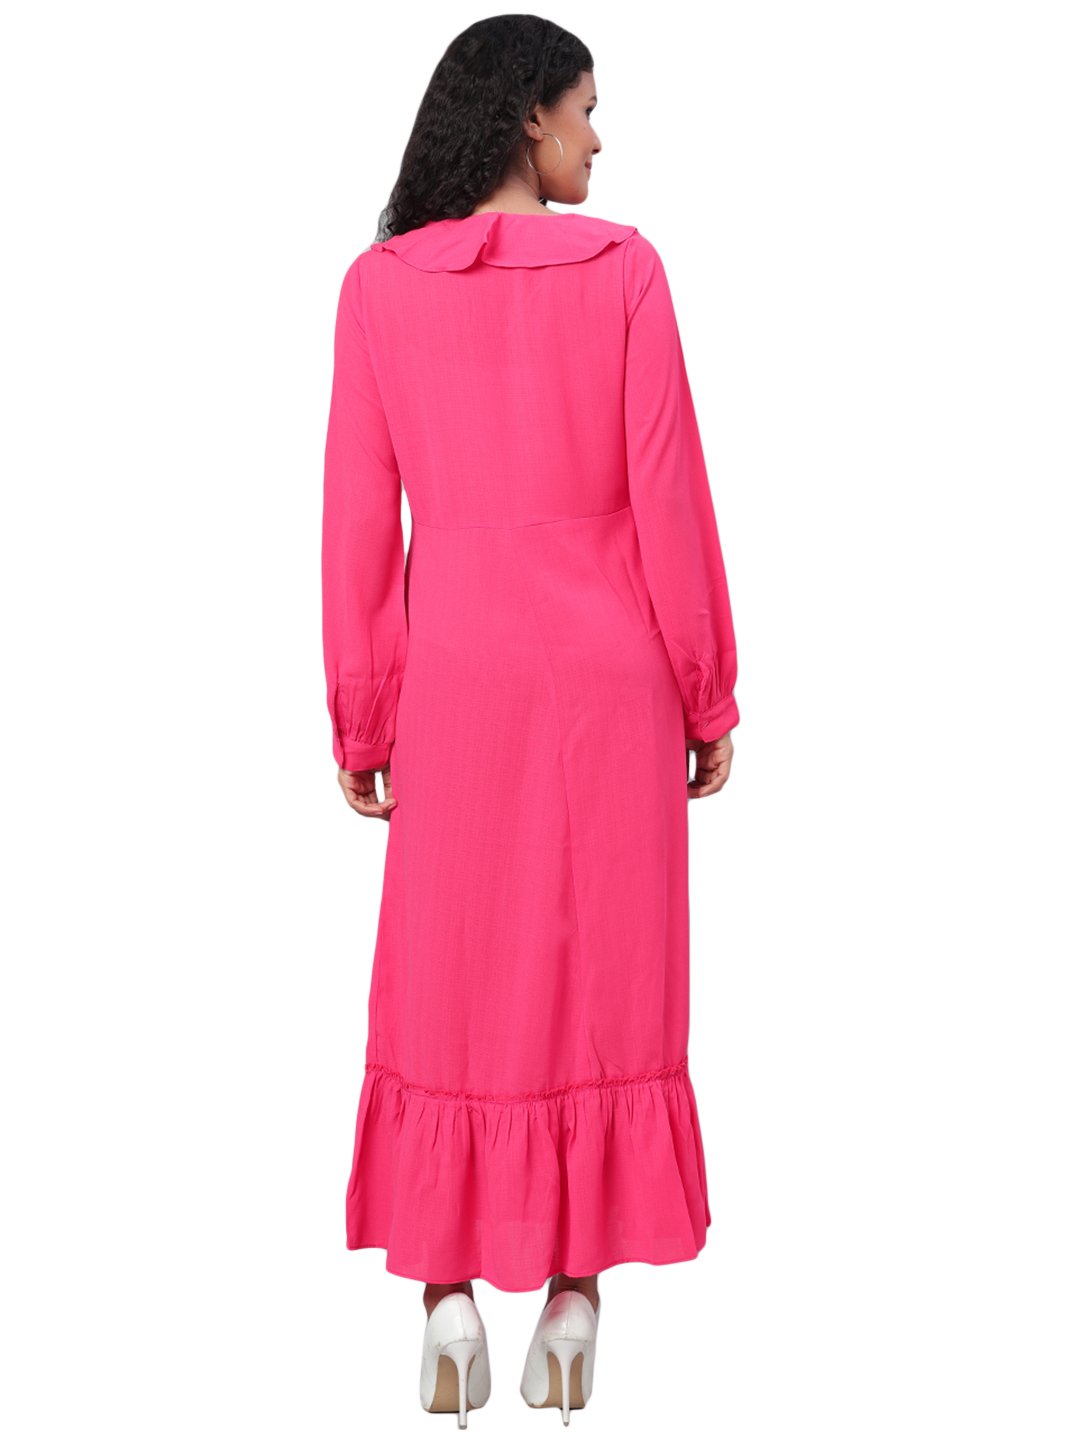 Women's Pink Solid Full Sleeve Polyester V Neck Casual Dress - Myshka